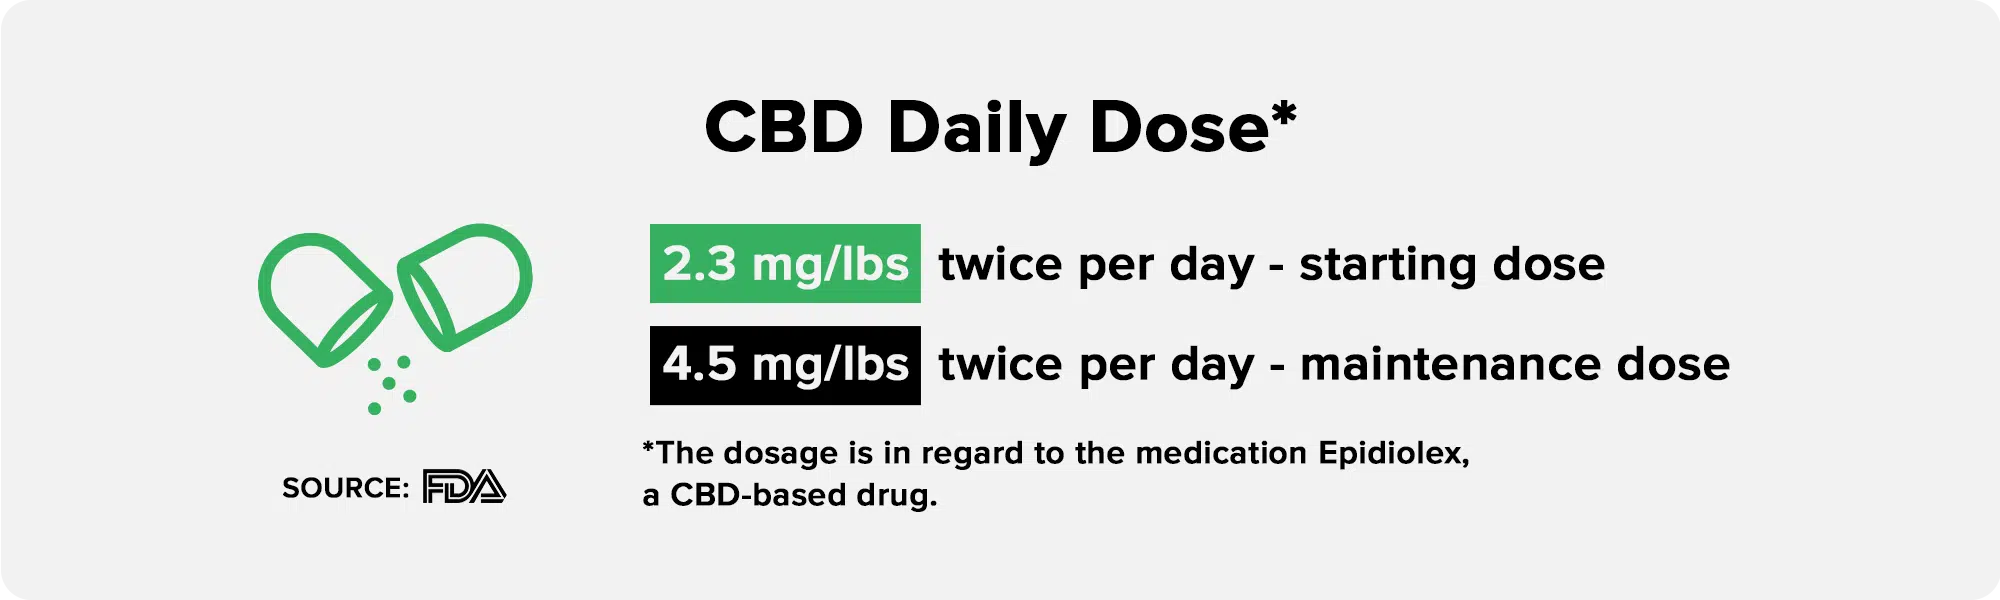 cbd and cbda daily dose